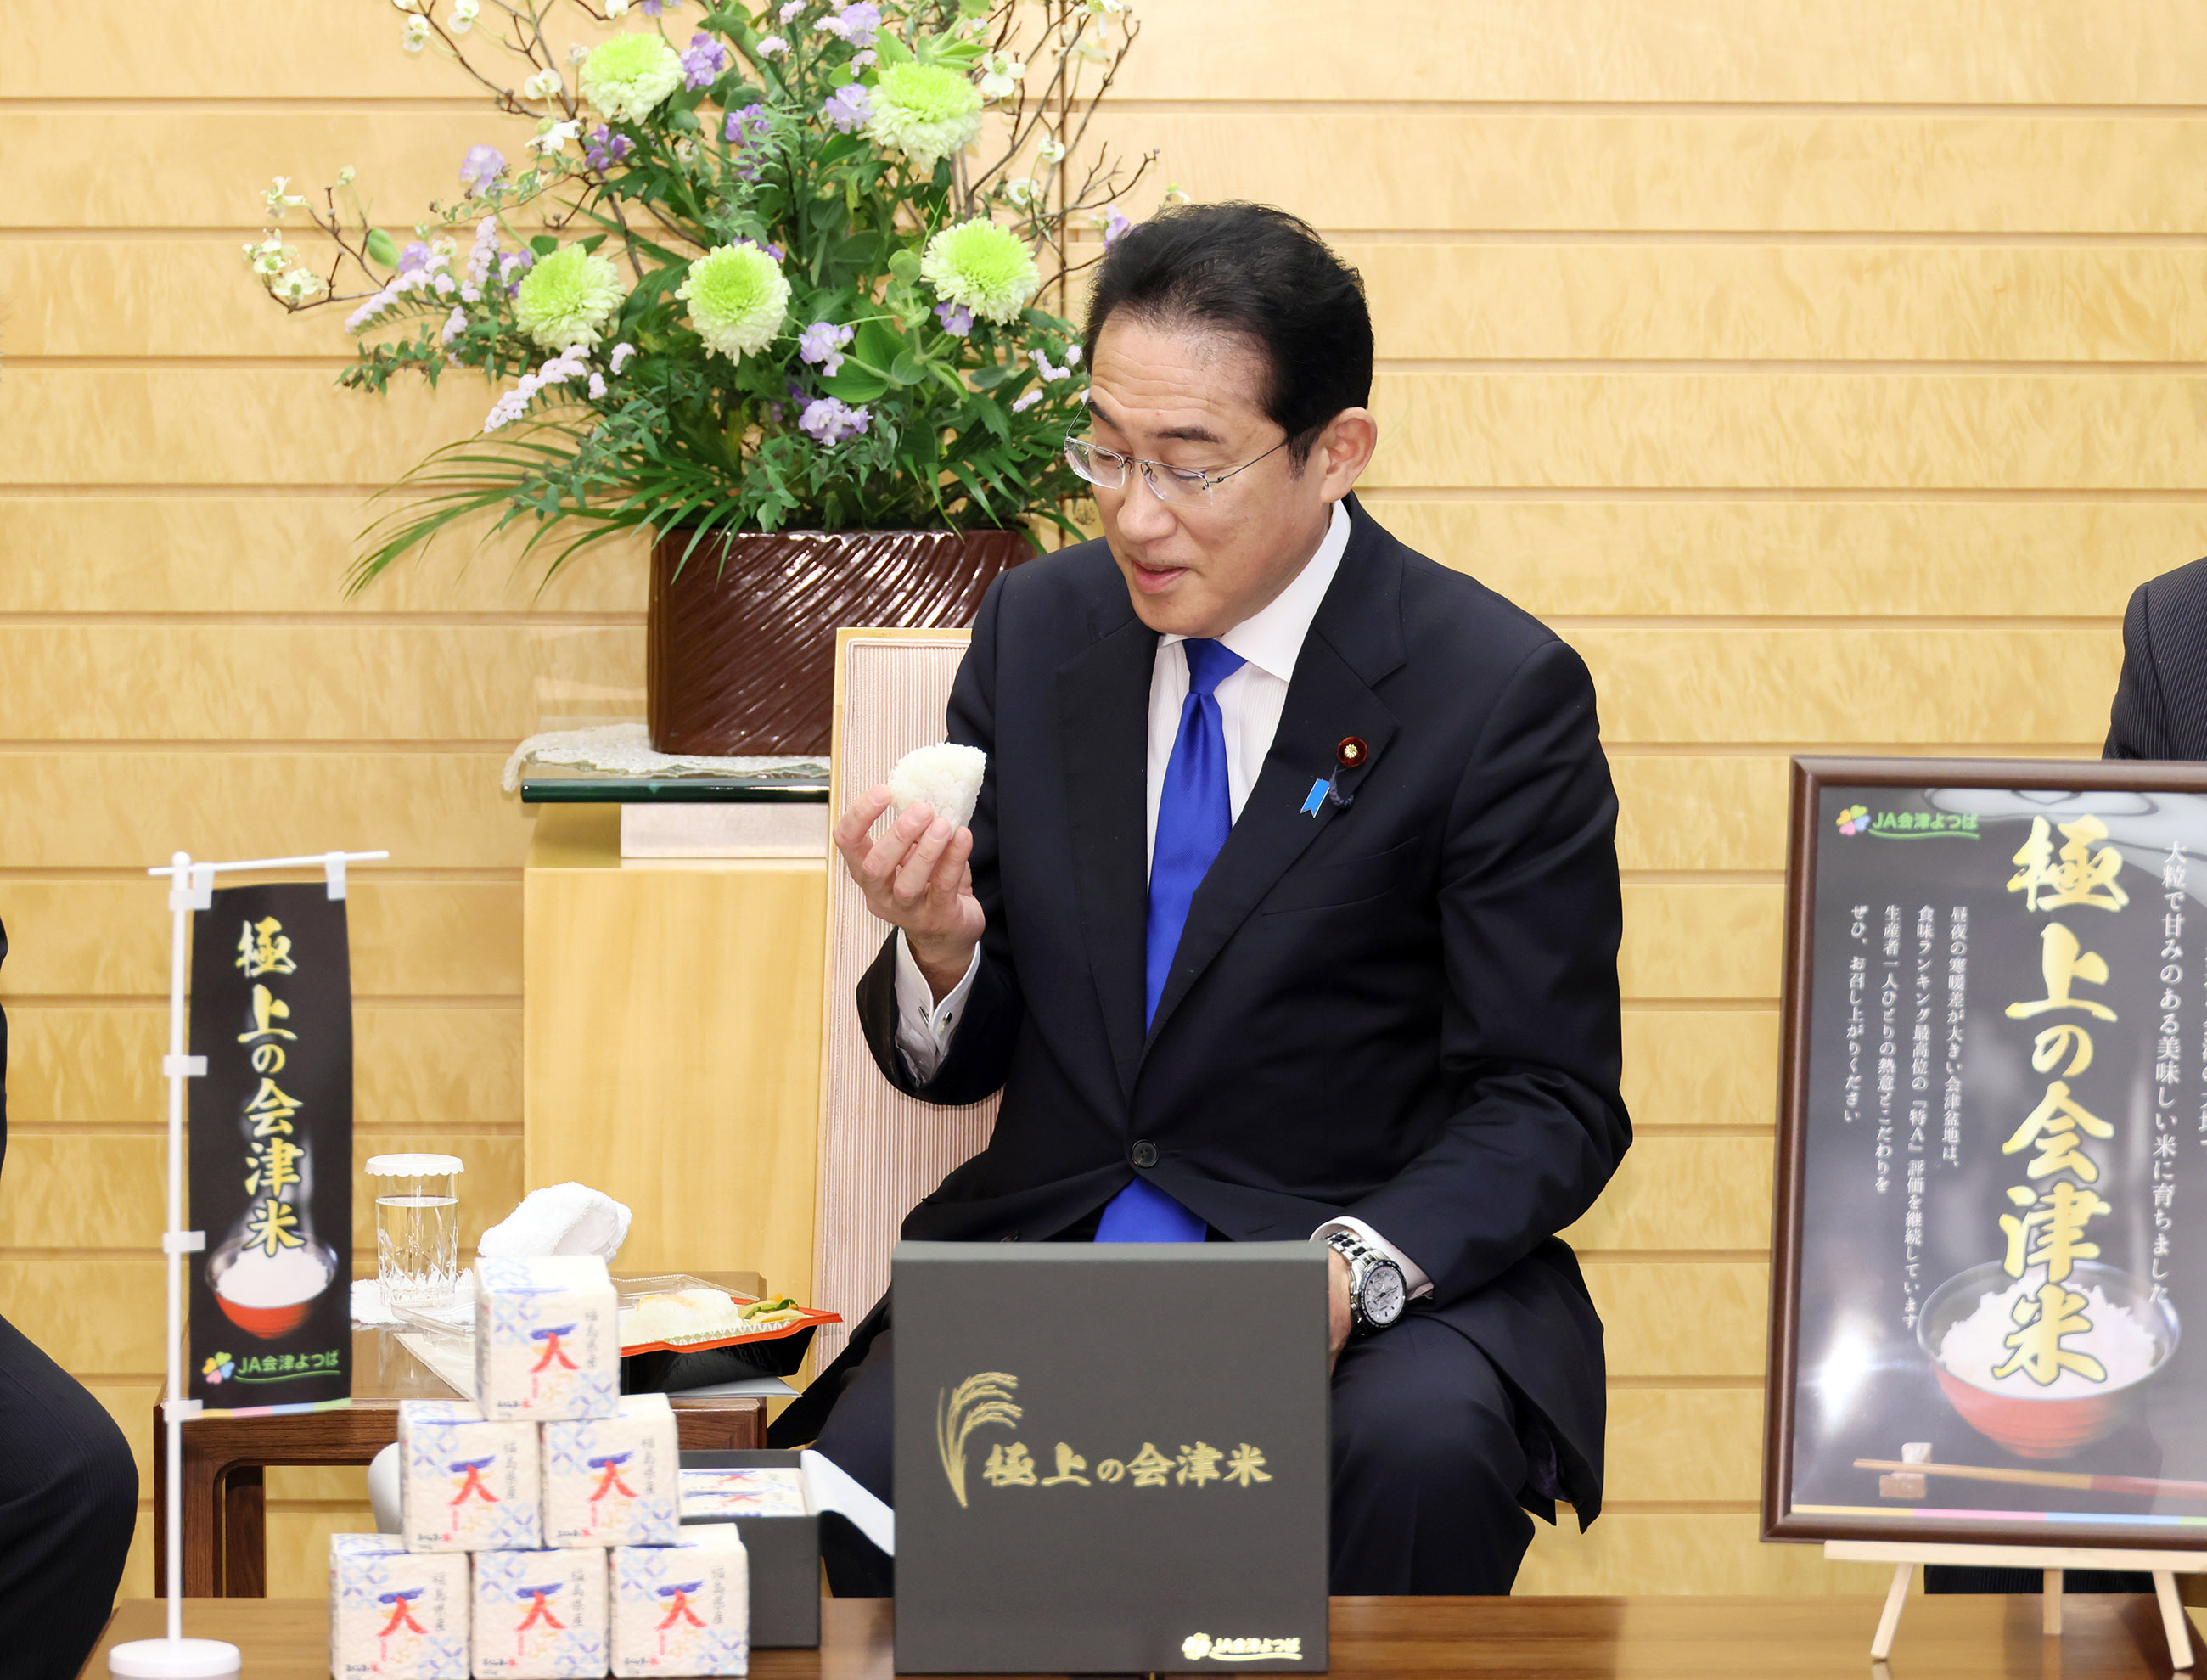 Prime Minister Kishida receiving gifts (3)